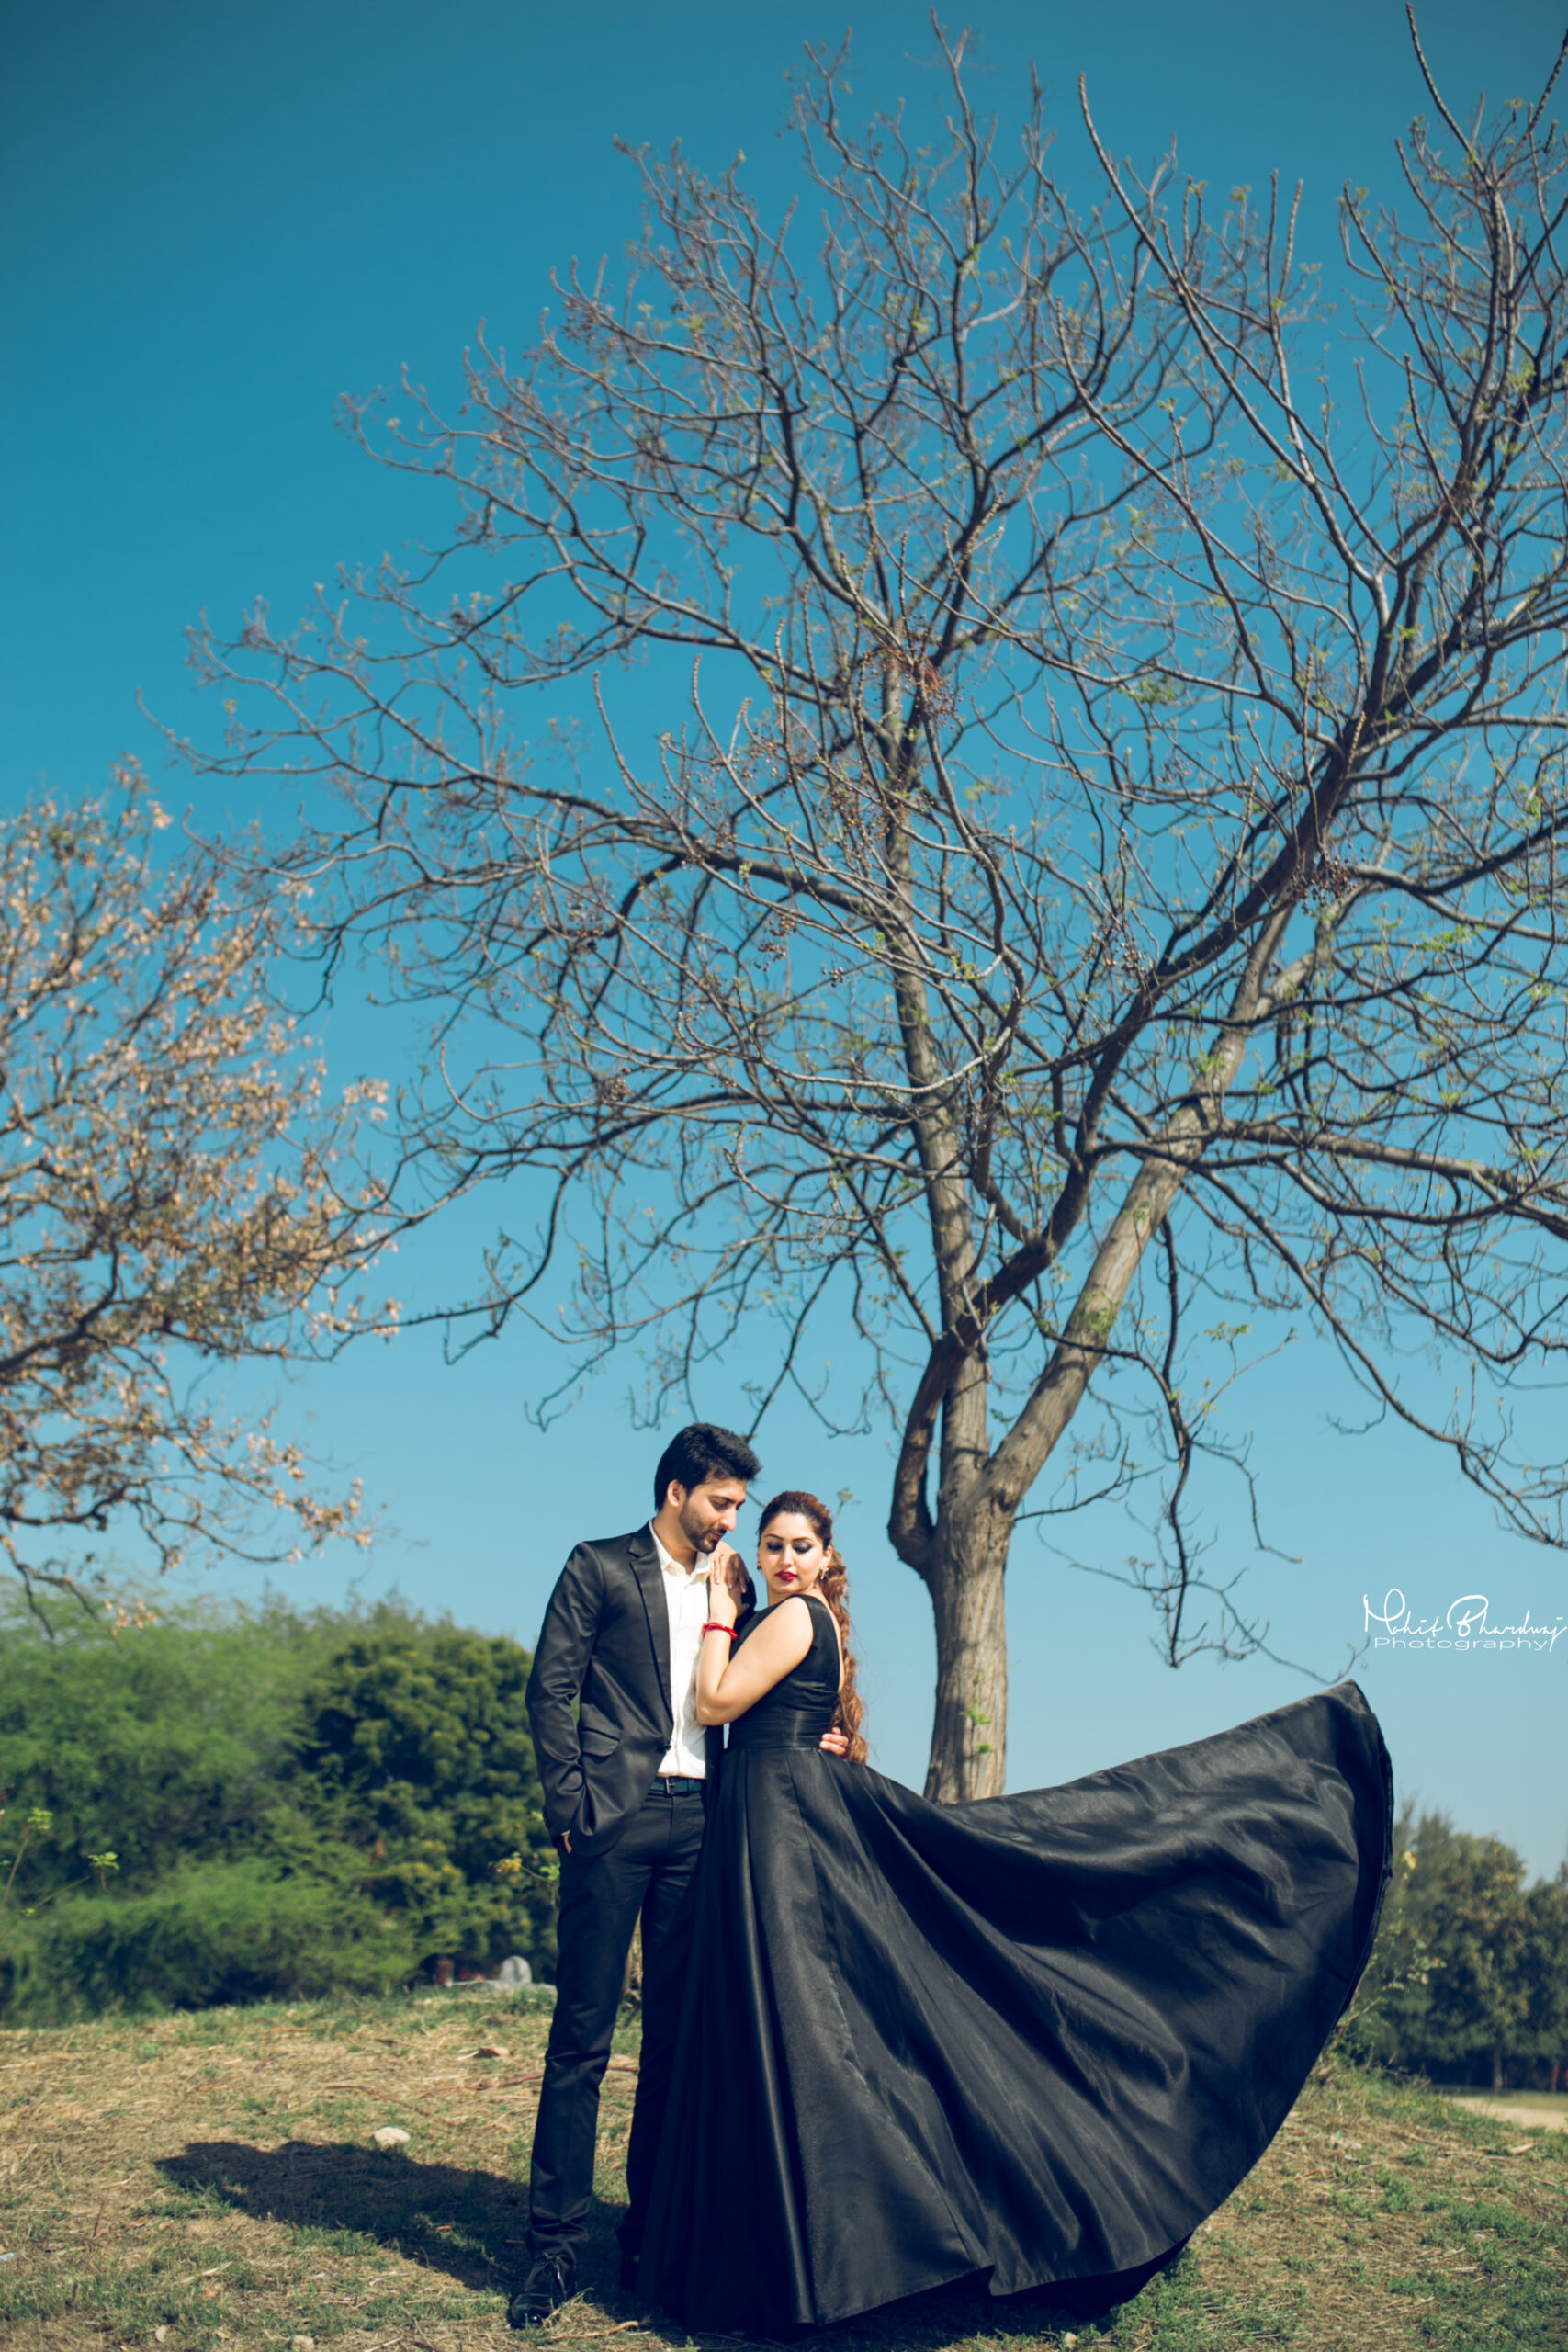 Komal and Akshay's Pre-Wedding Photo Shoot in the Desert Exuded a Fairytale  Vibe - WeddingSutra Blog